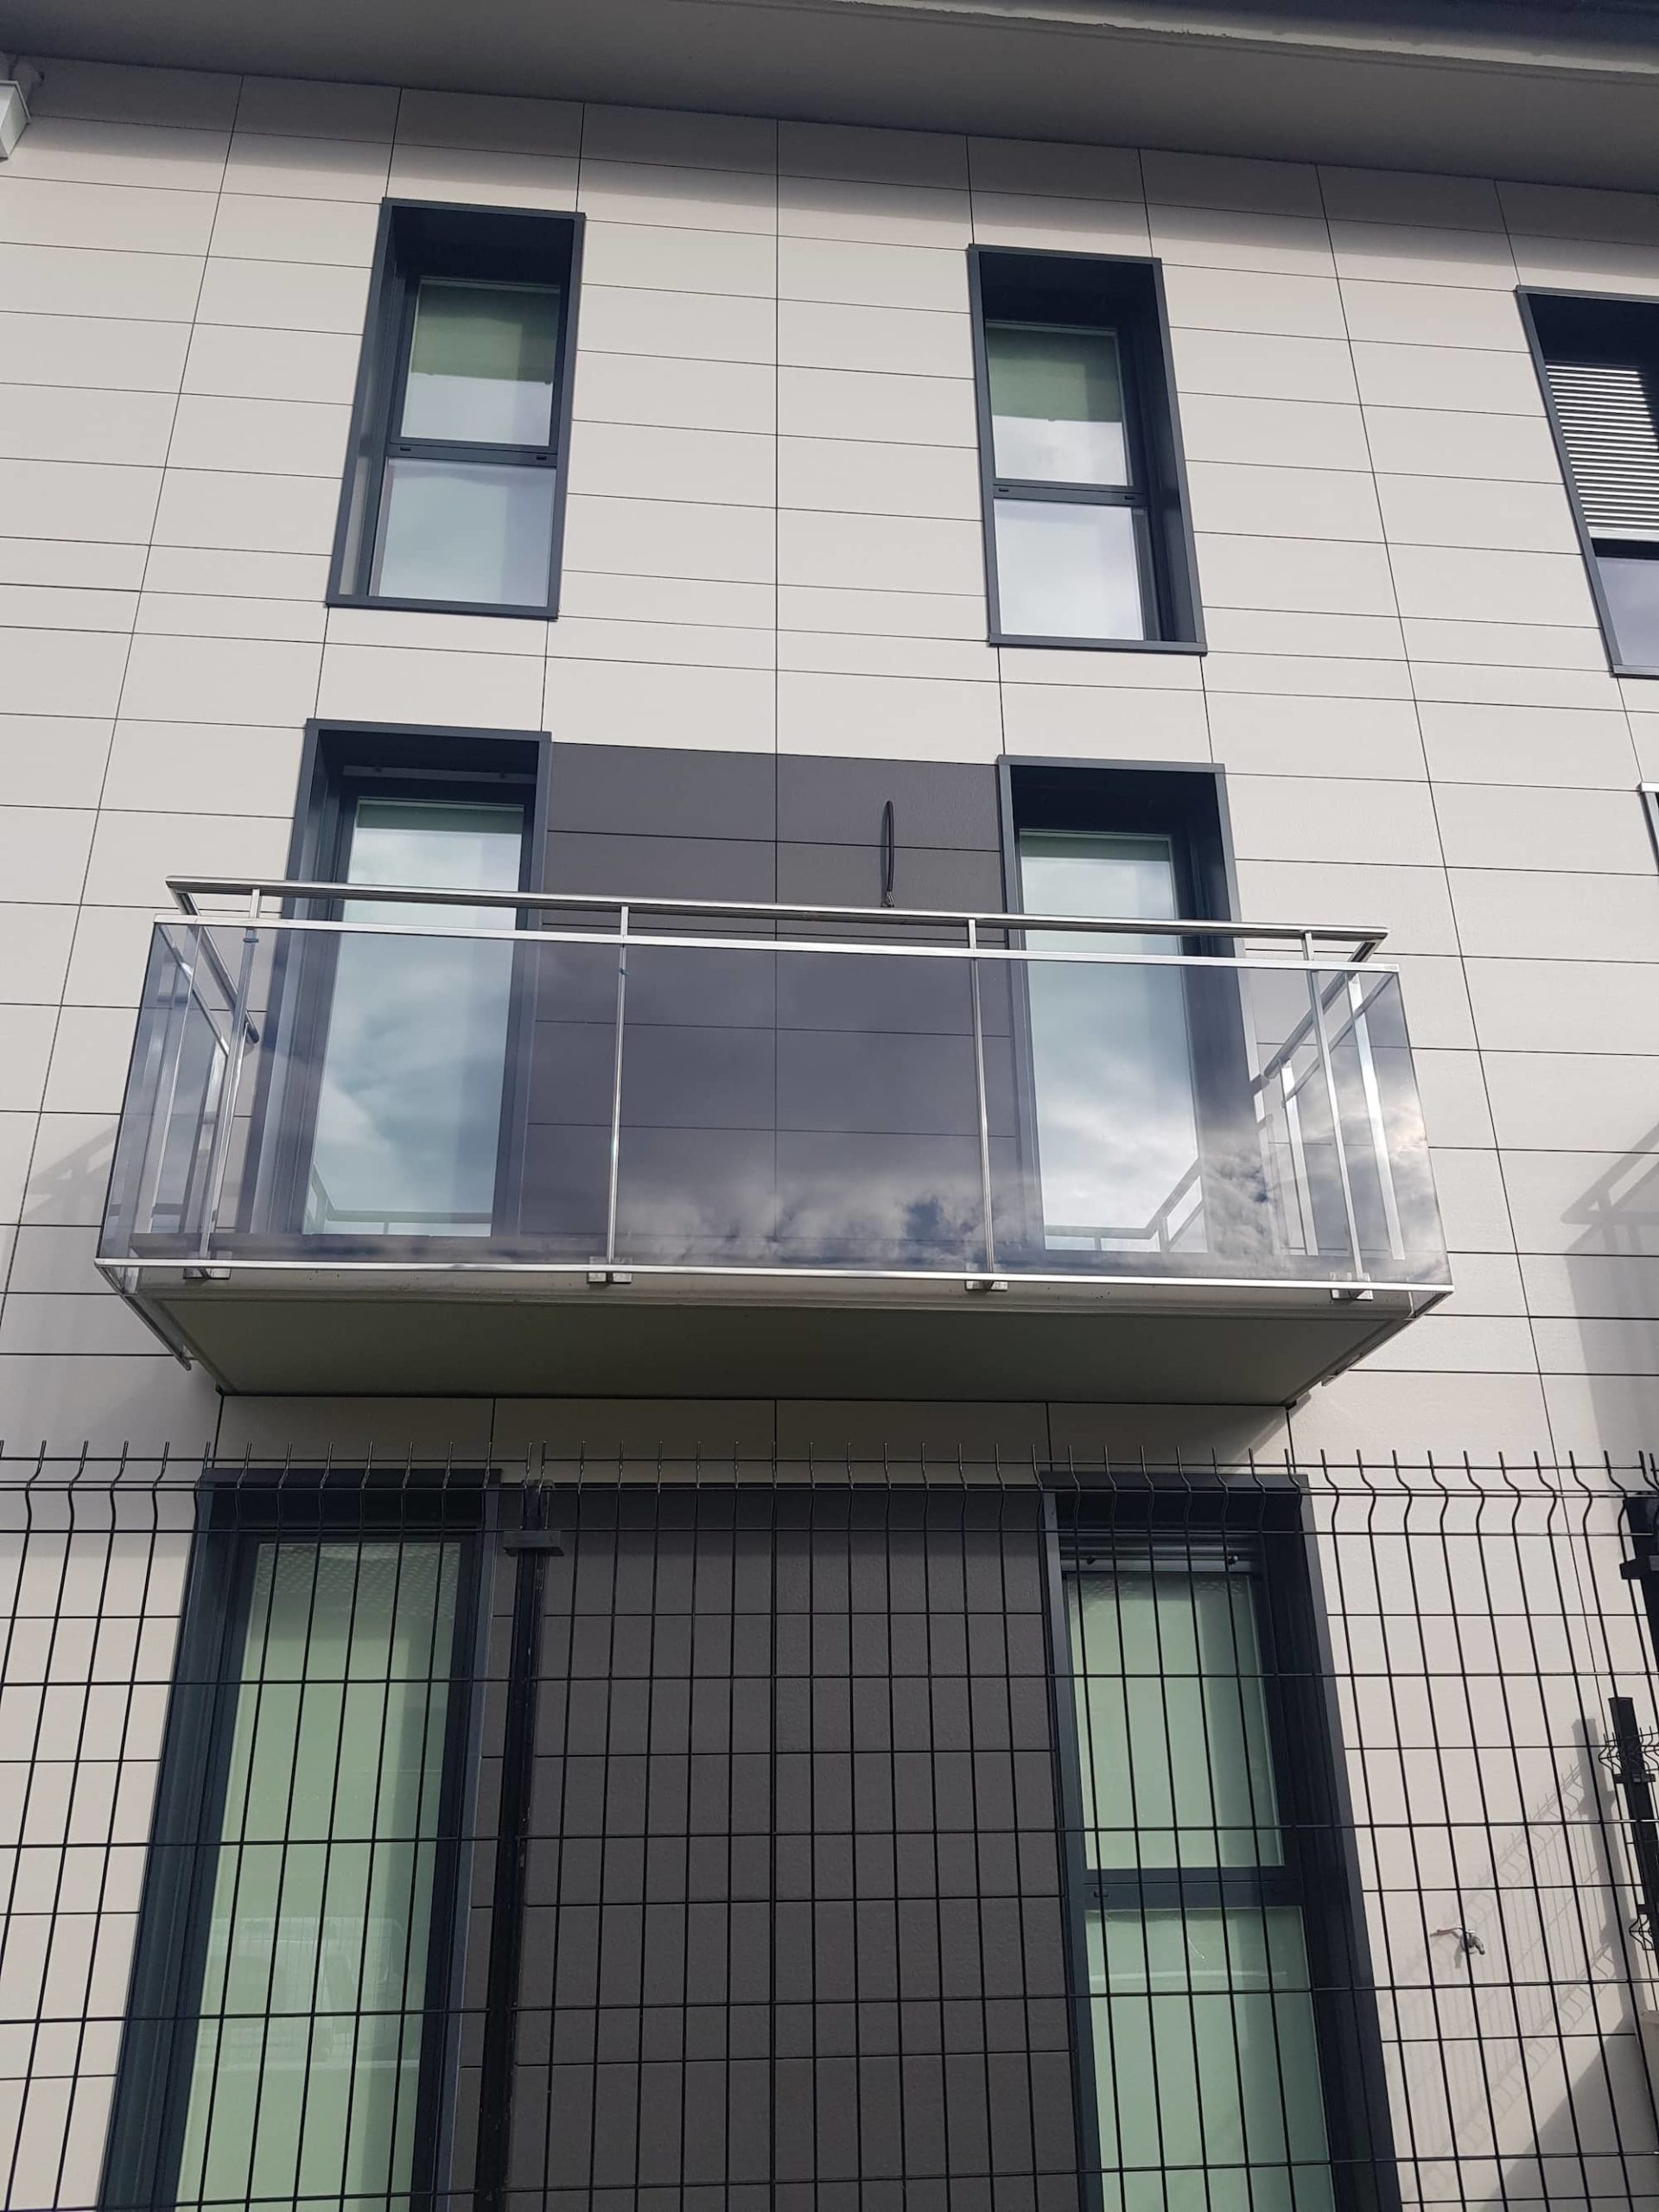 detalle balcon cristal 36 viviendas en orio promocion